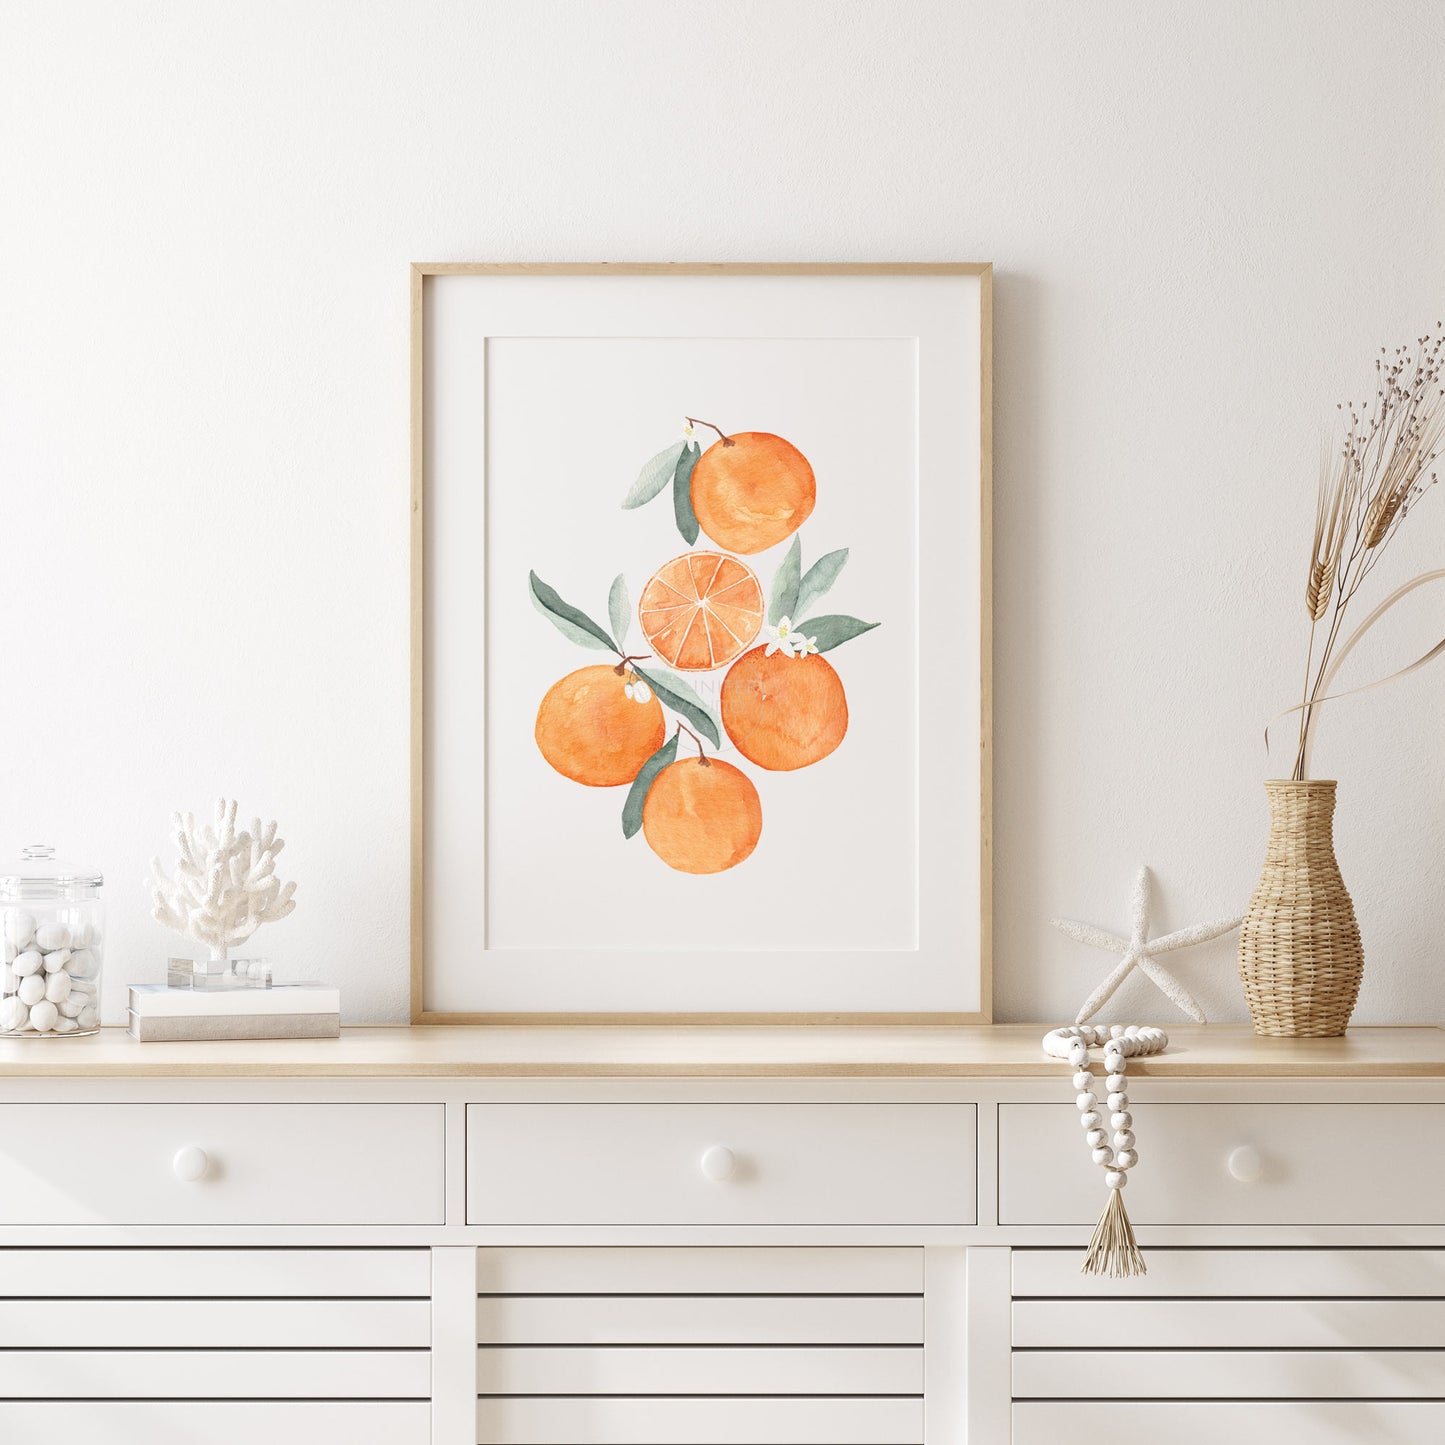 Oranges Print, Oranges Watercolor, Citrus Wall Art, Kitchen Decor, Nursery Wall Art